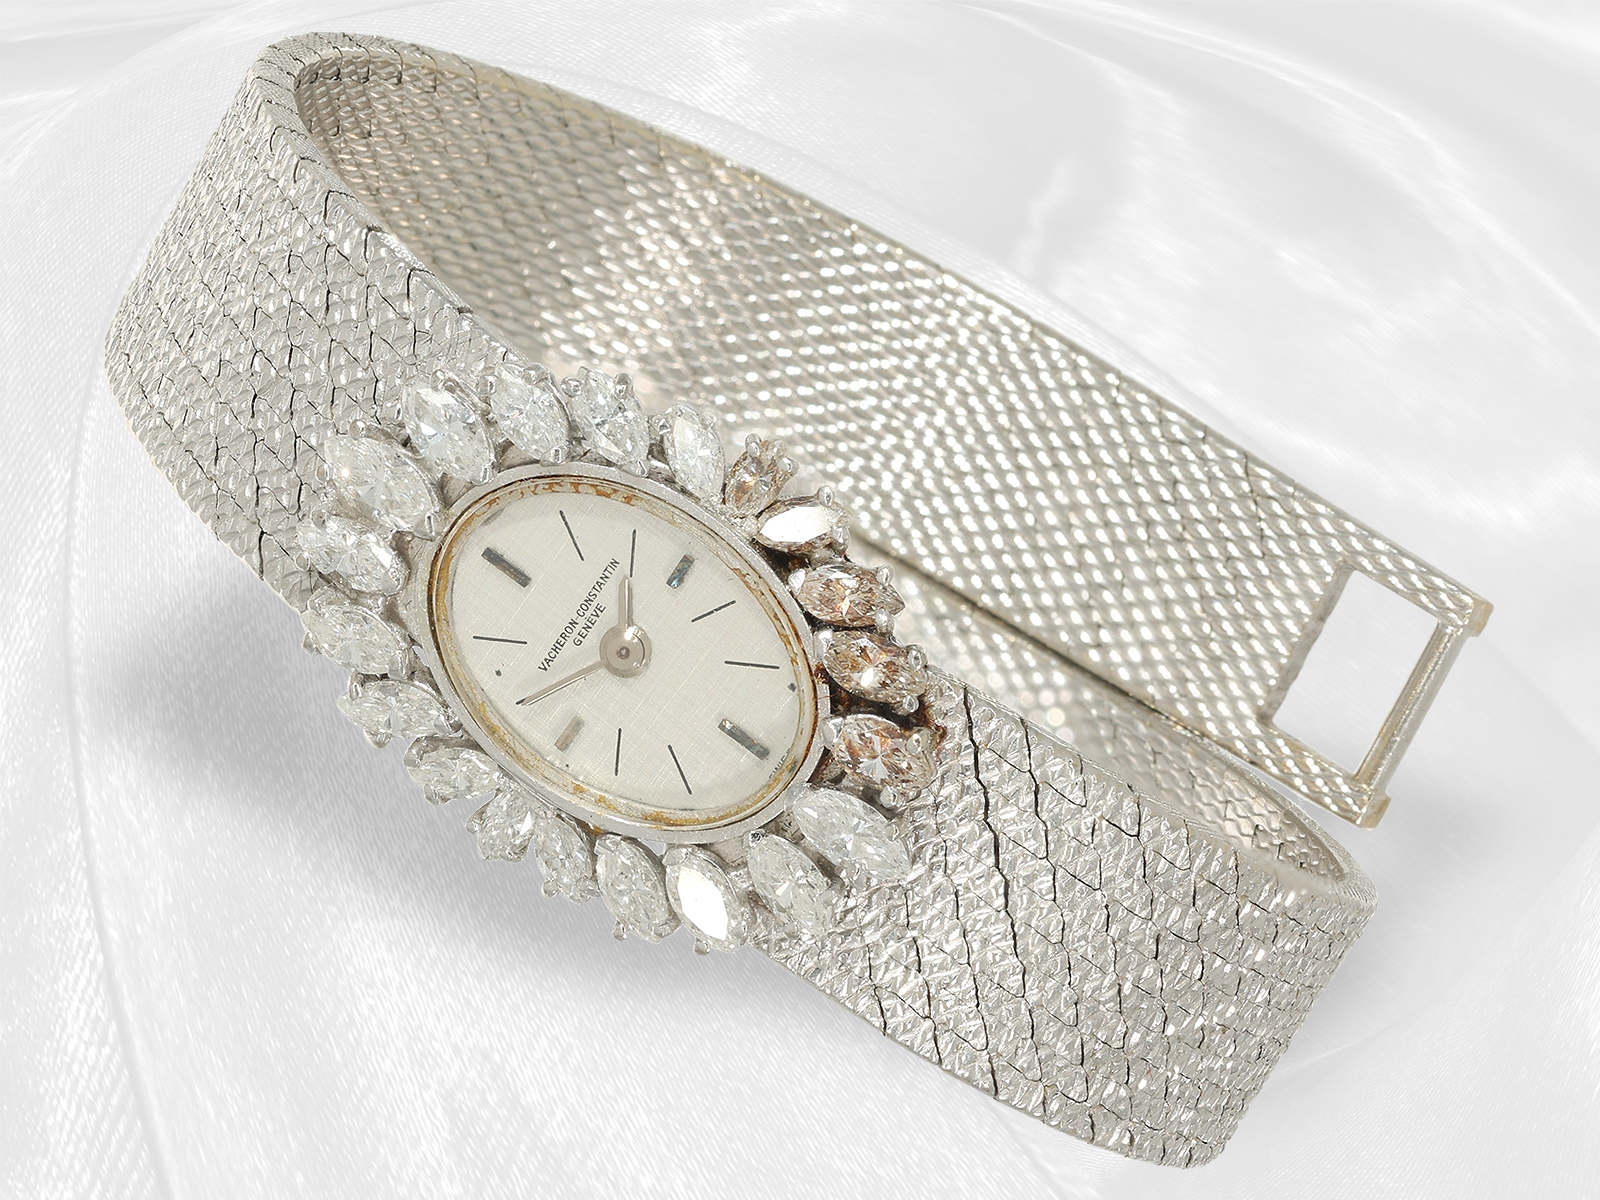 Wristwatch: noble, white gold vintage ladies' watch by Vacheron-Constantin, diamond set, approx. 1.2